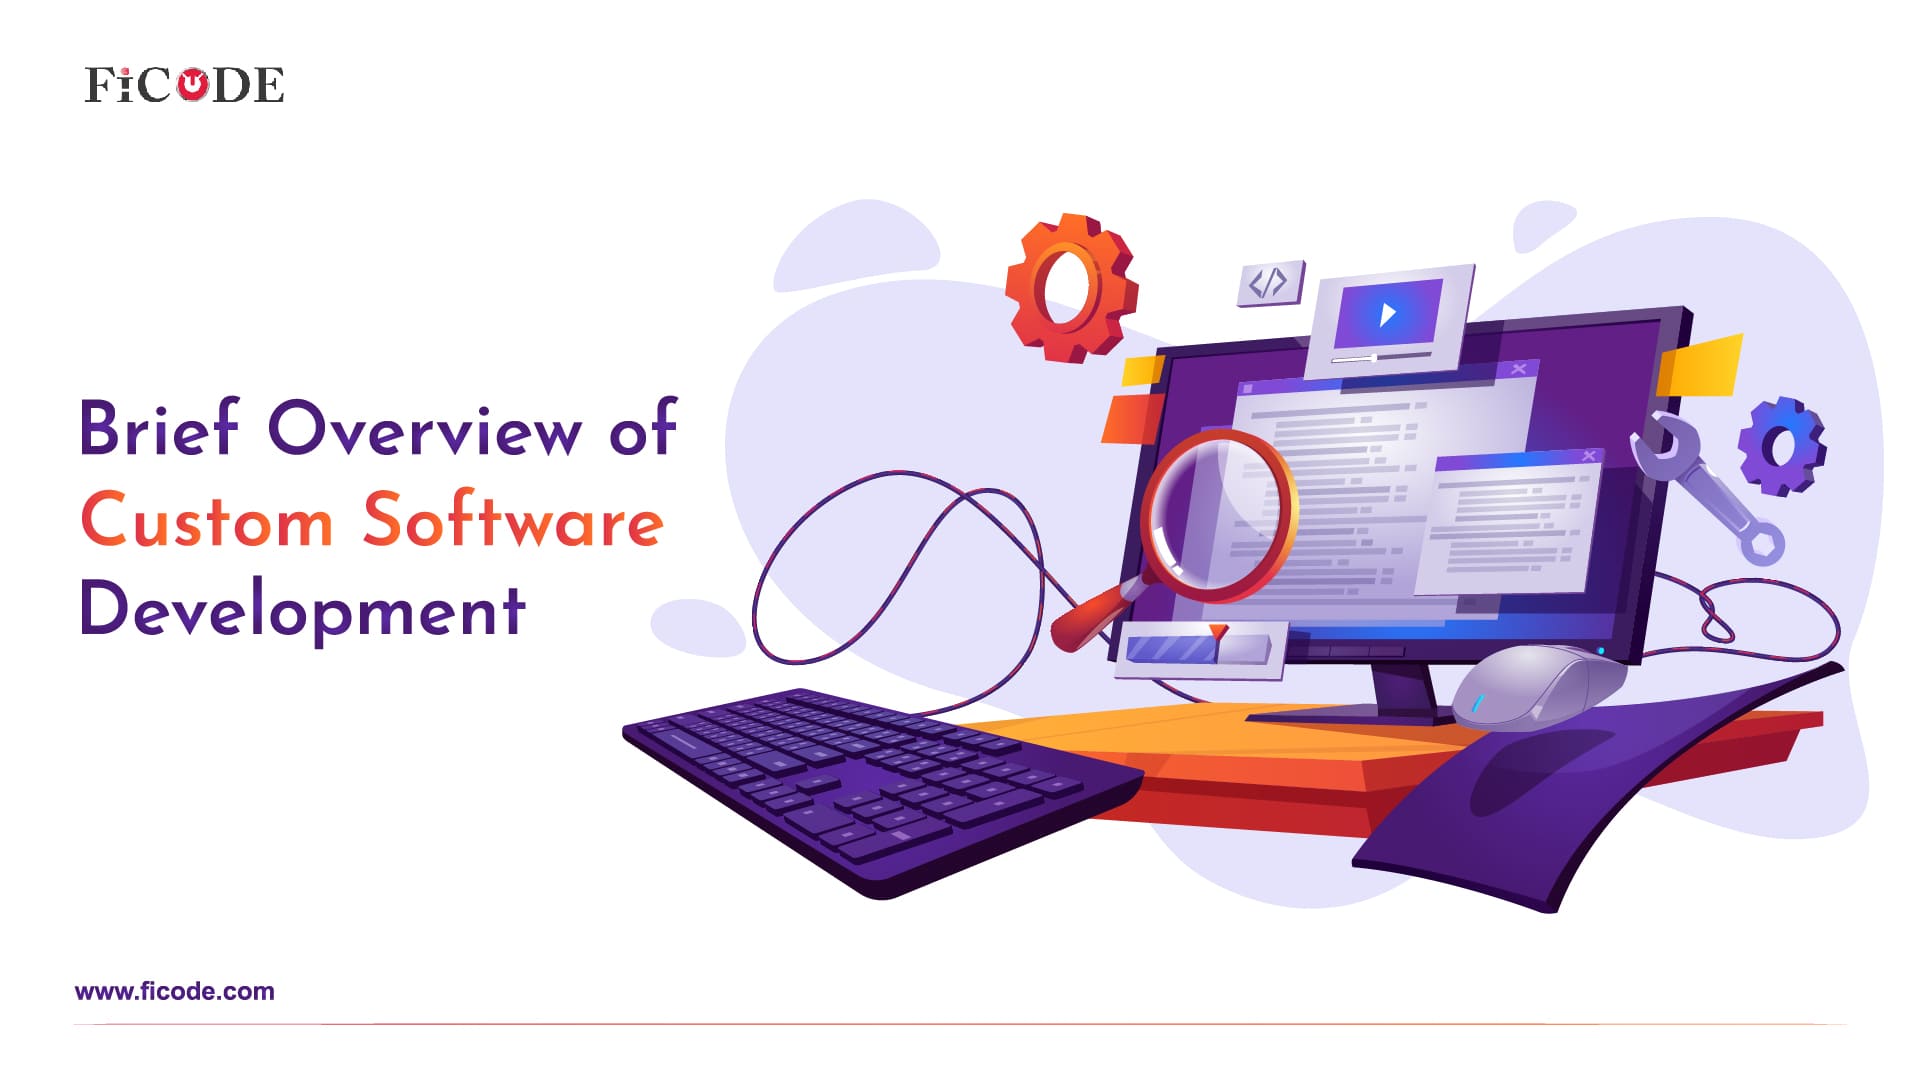 A Brief Overview of Custom Software Development